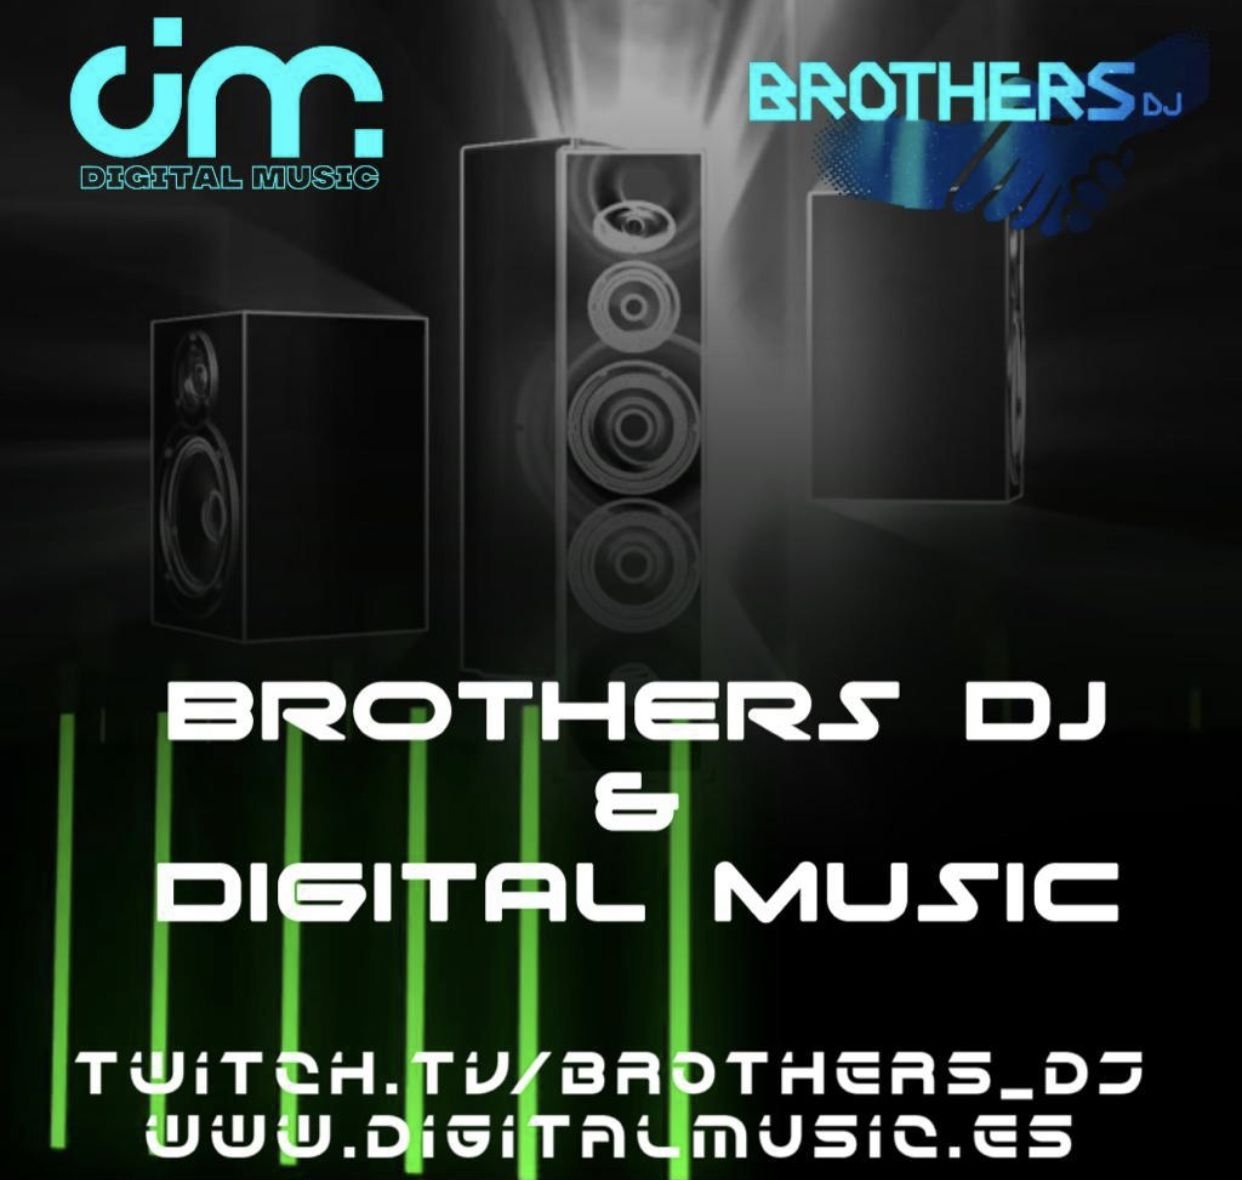 TECHNO BROTHERS DJ & DIGITAL MUSIC EVENT